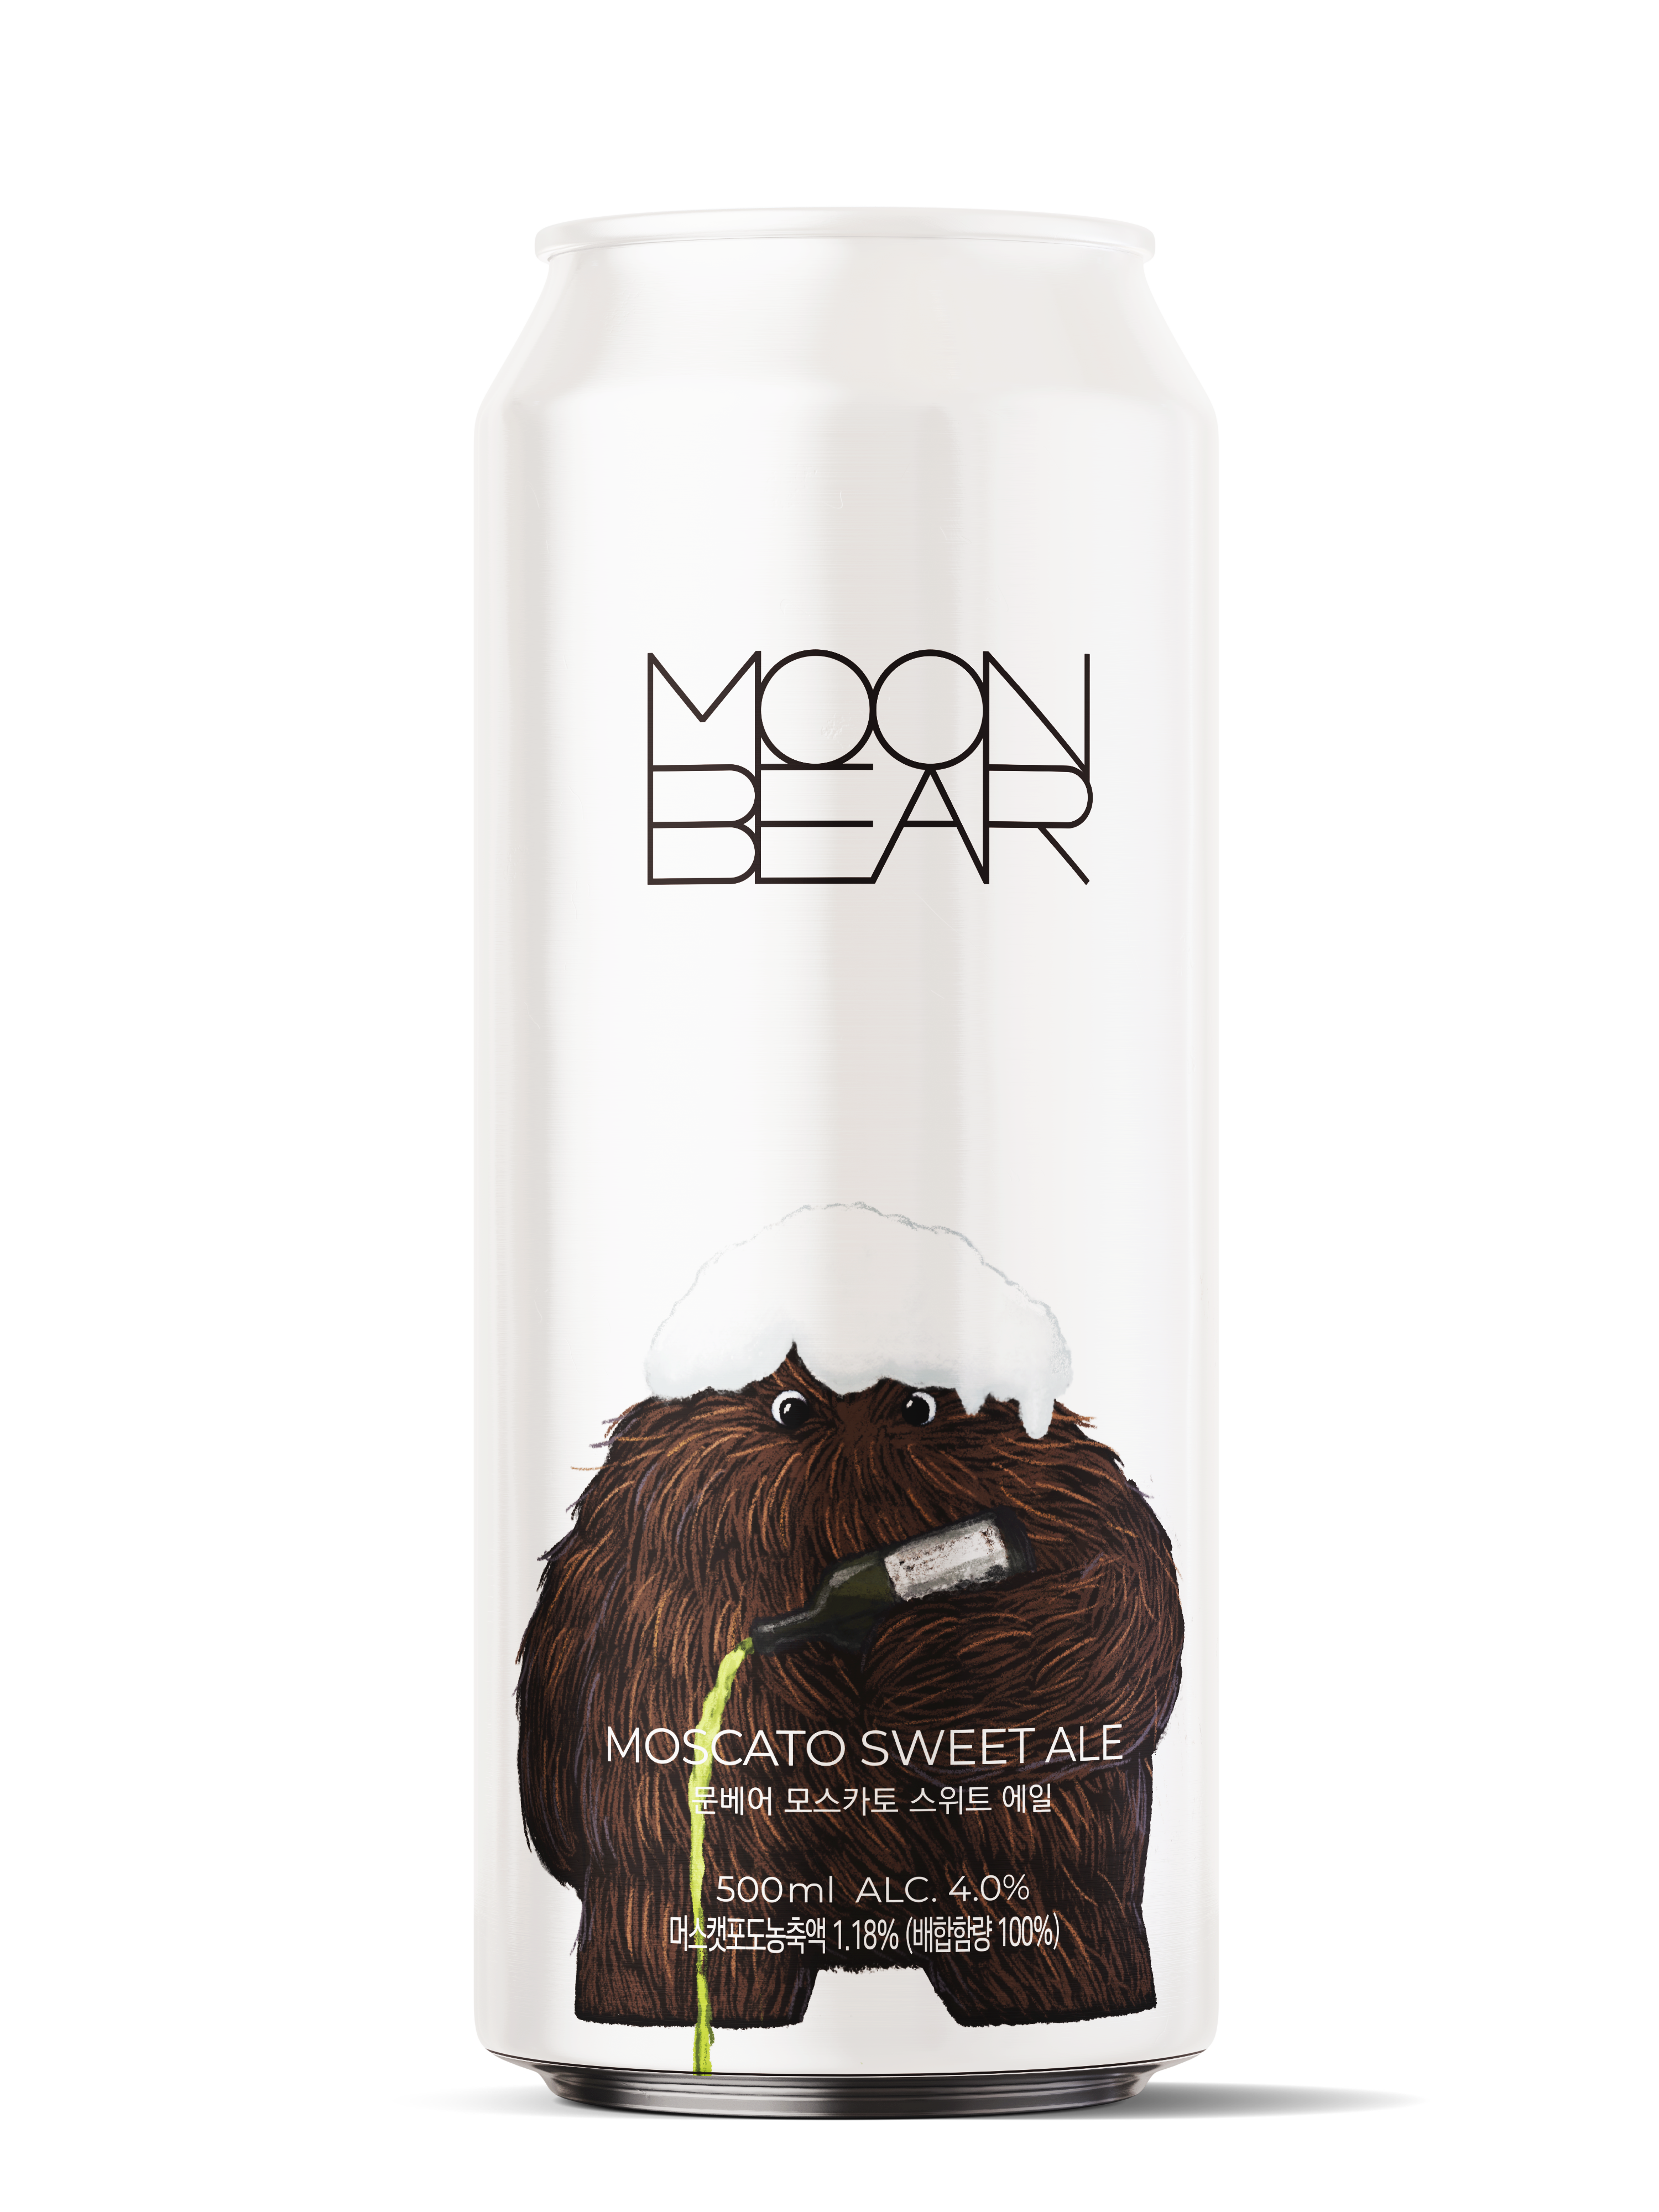 Moon Bear Moscato Sweet Ale